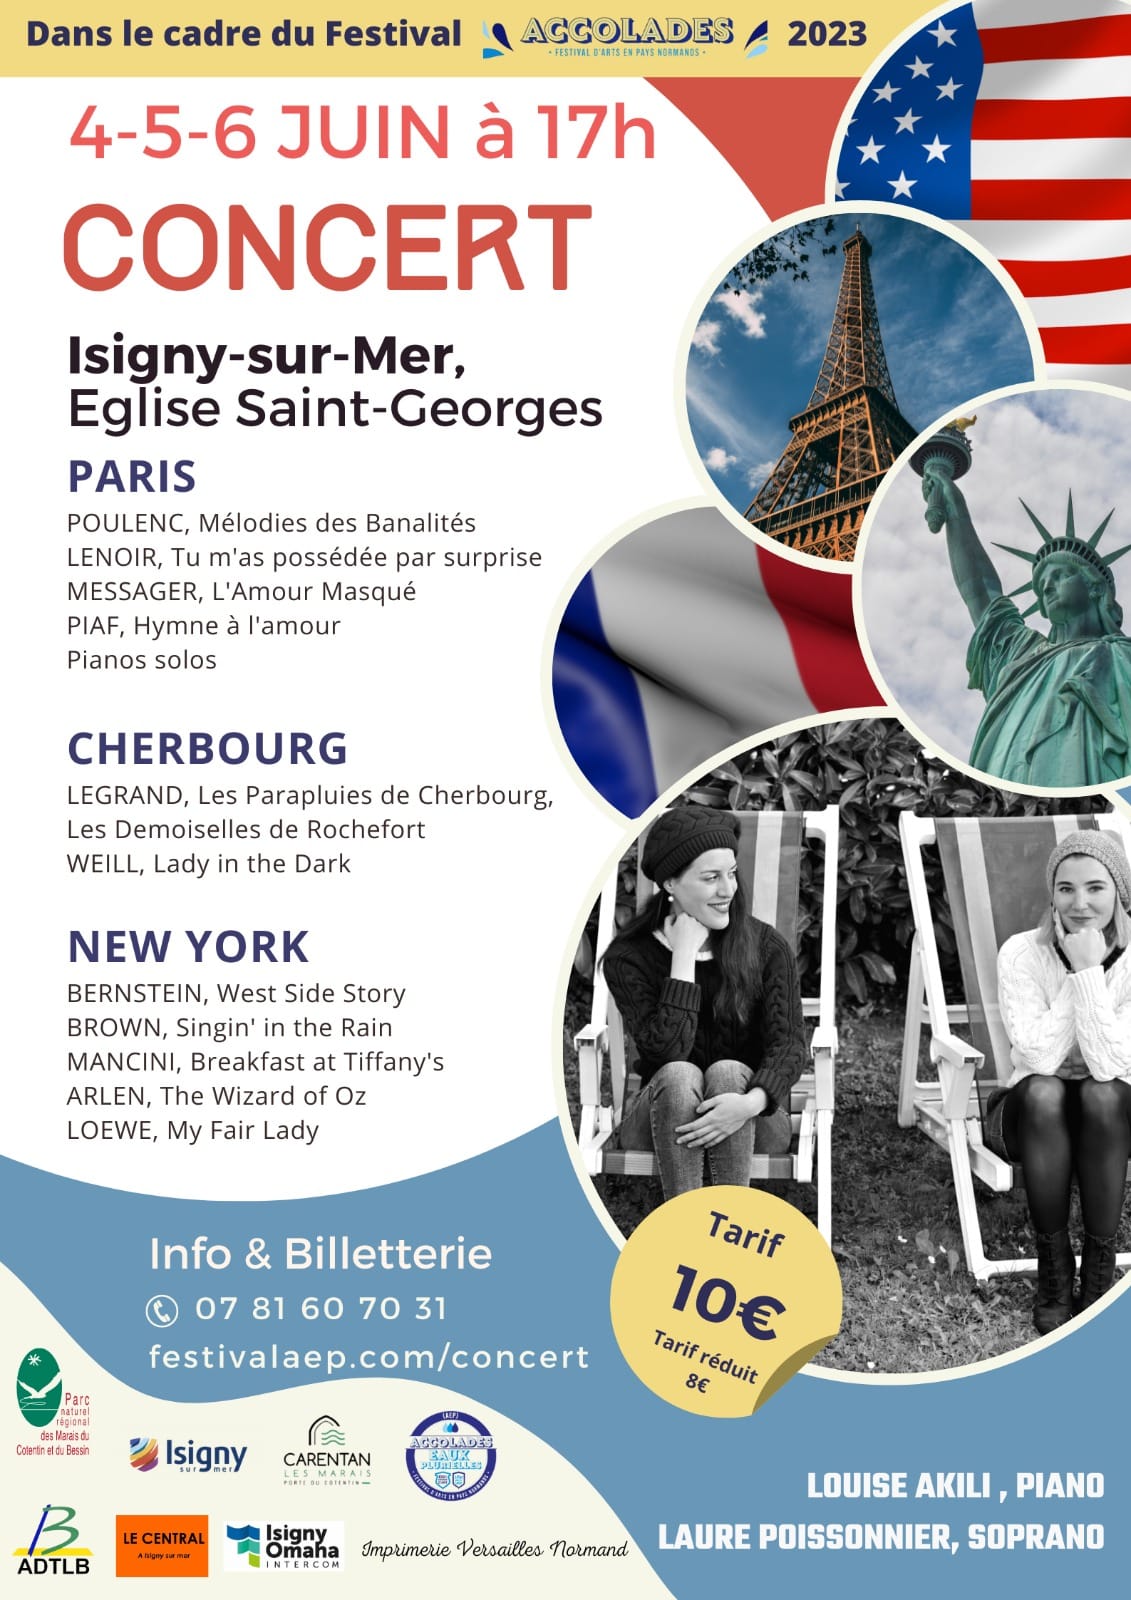   Concert-Paris-Cherbourg-New-York 